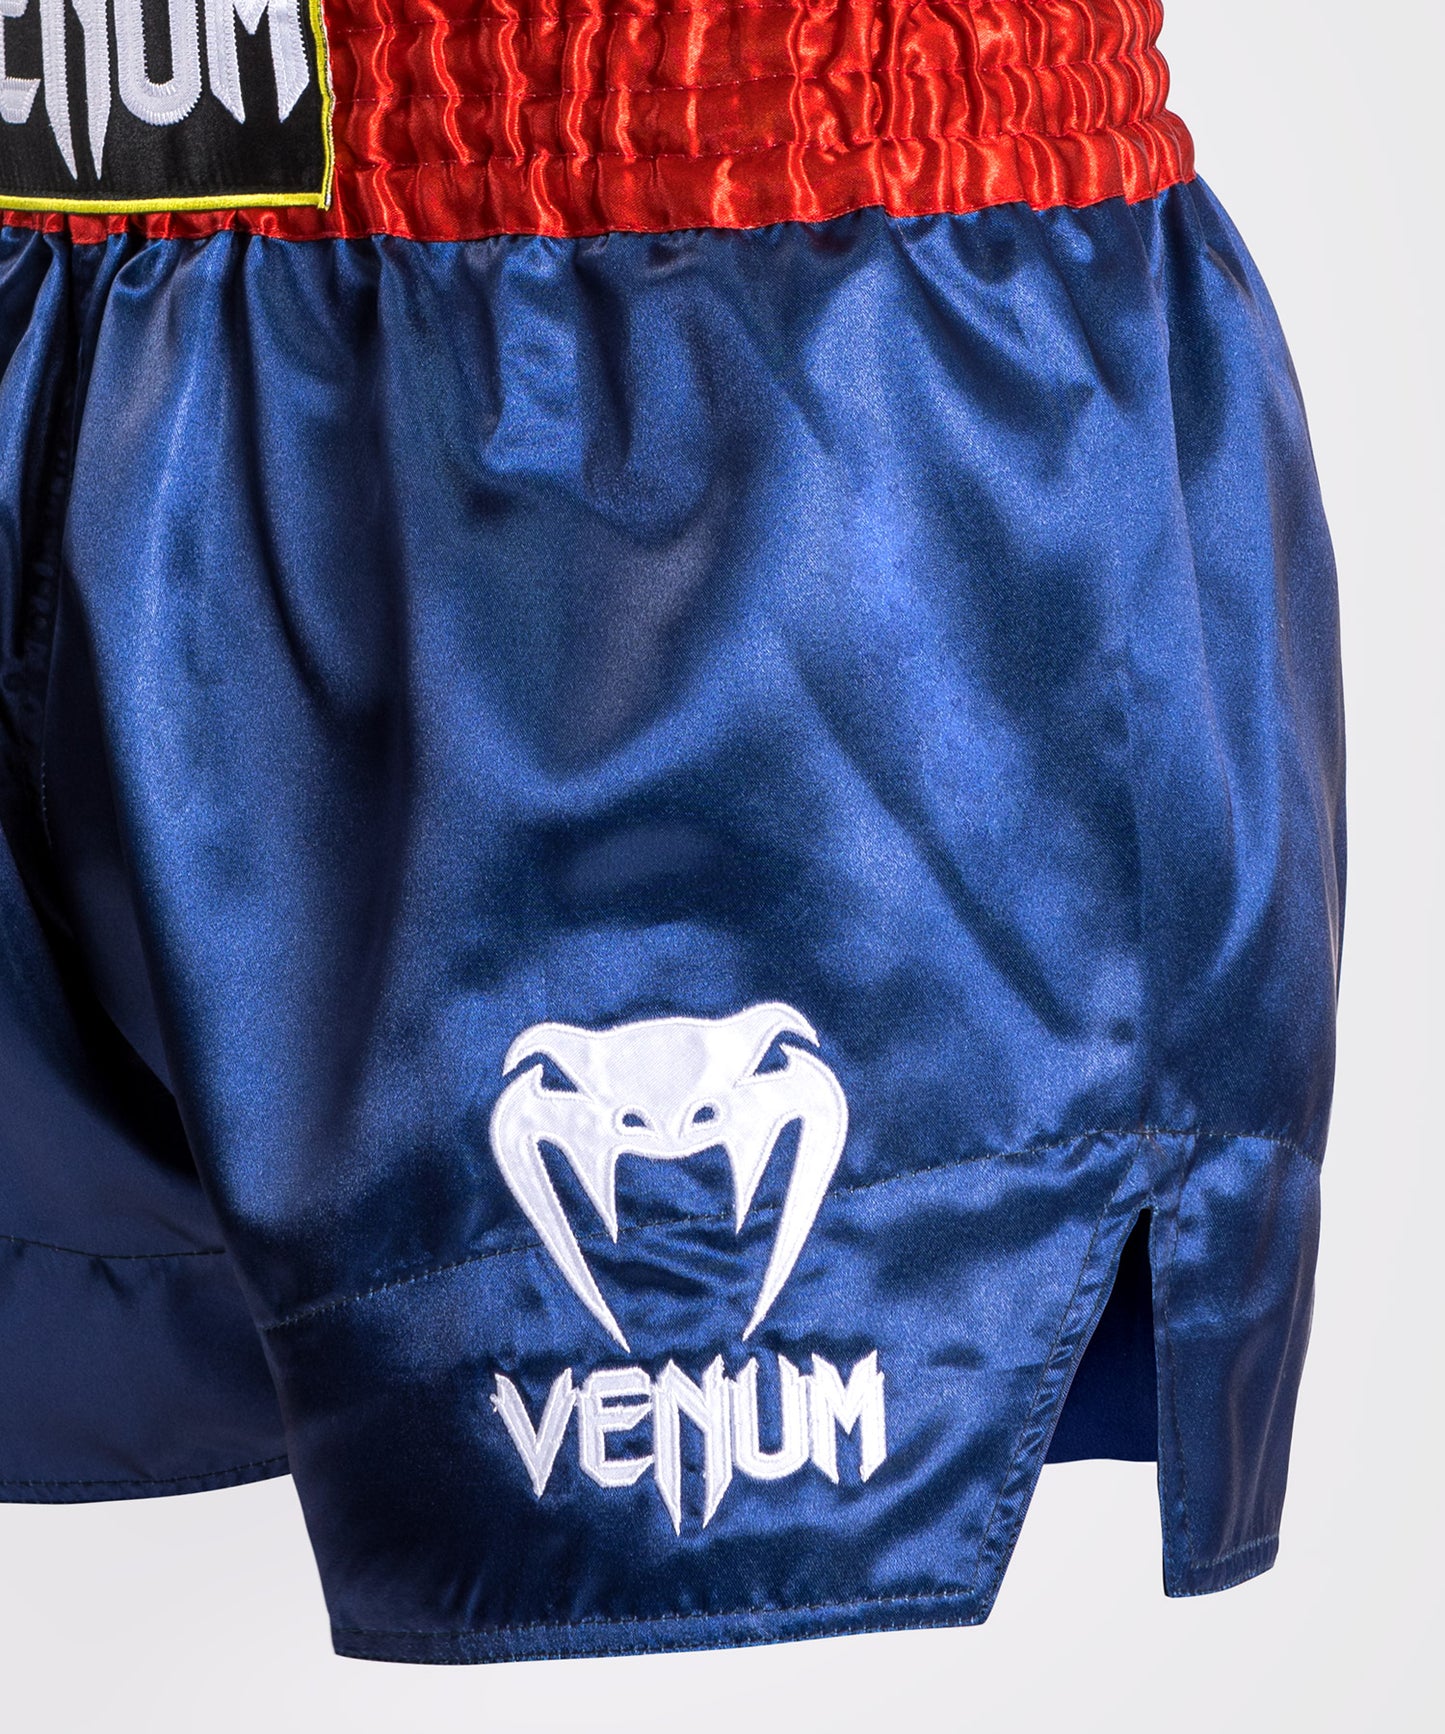 Venum Classic - Muay Thaï Short - Blue/Red/White